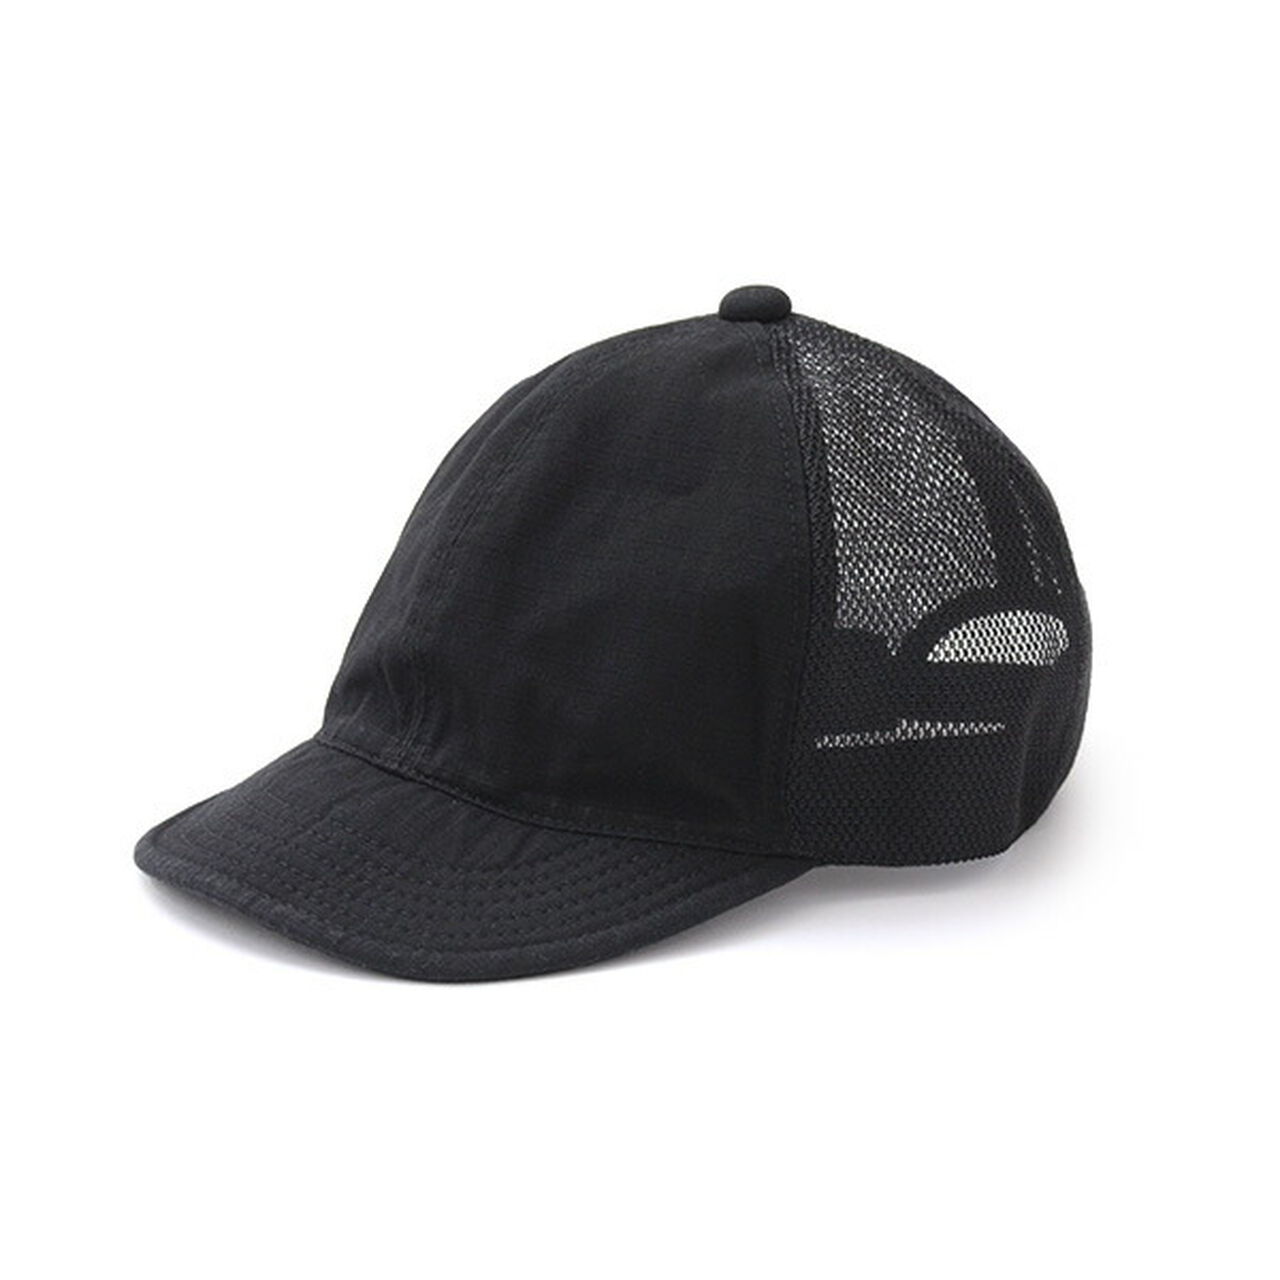 Ripstop mesh cap,Black, large image number 0